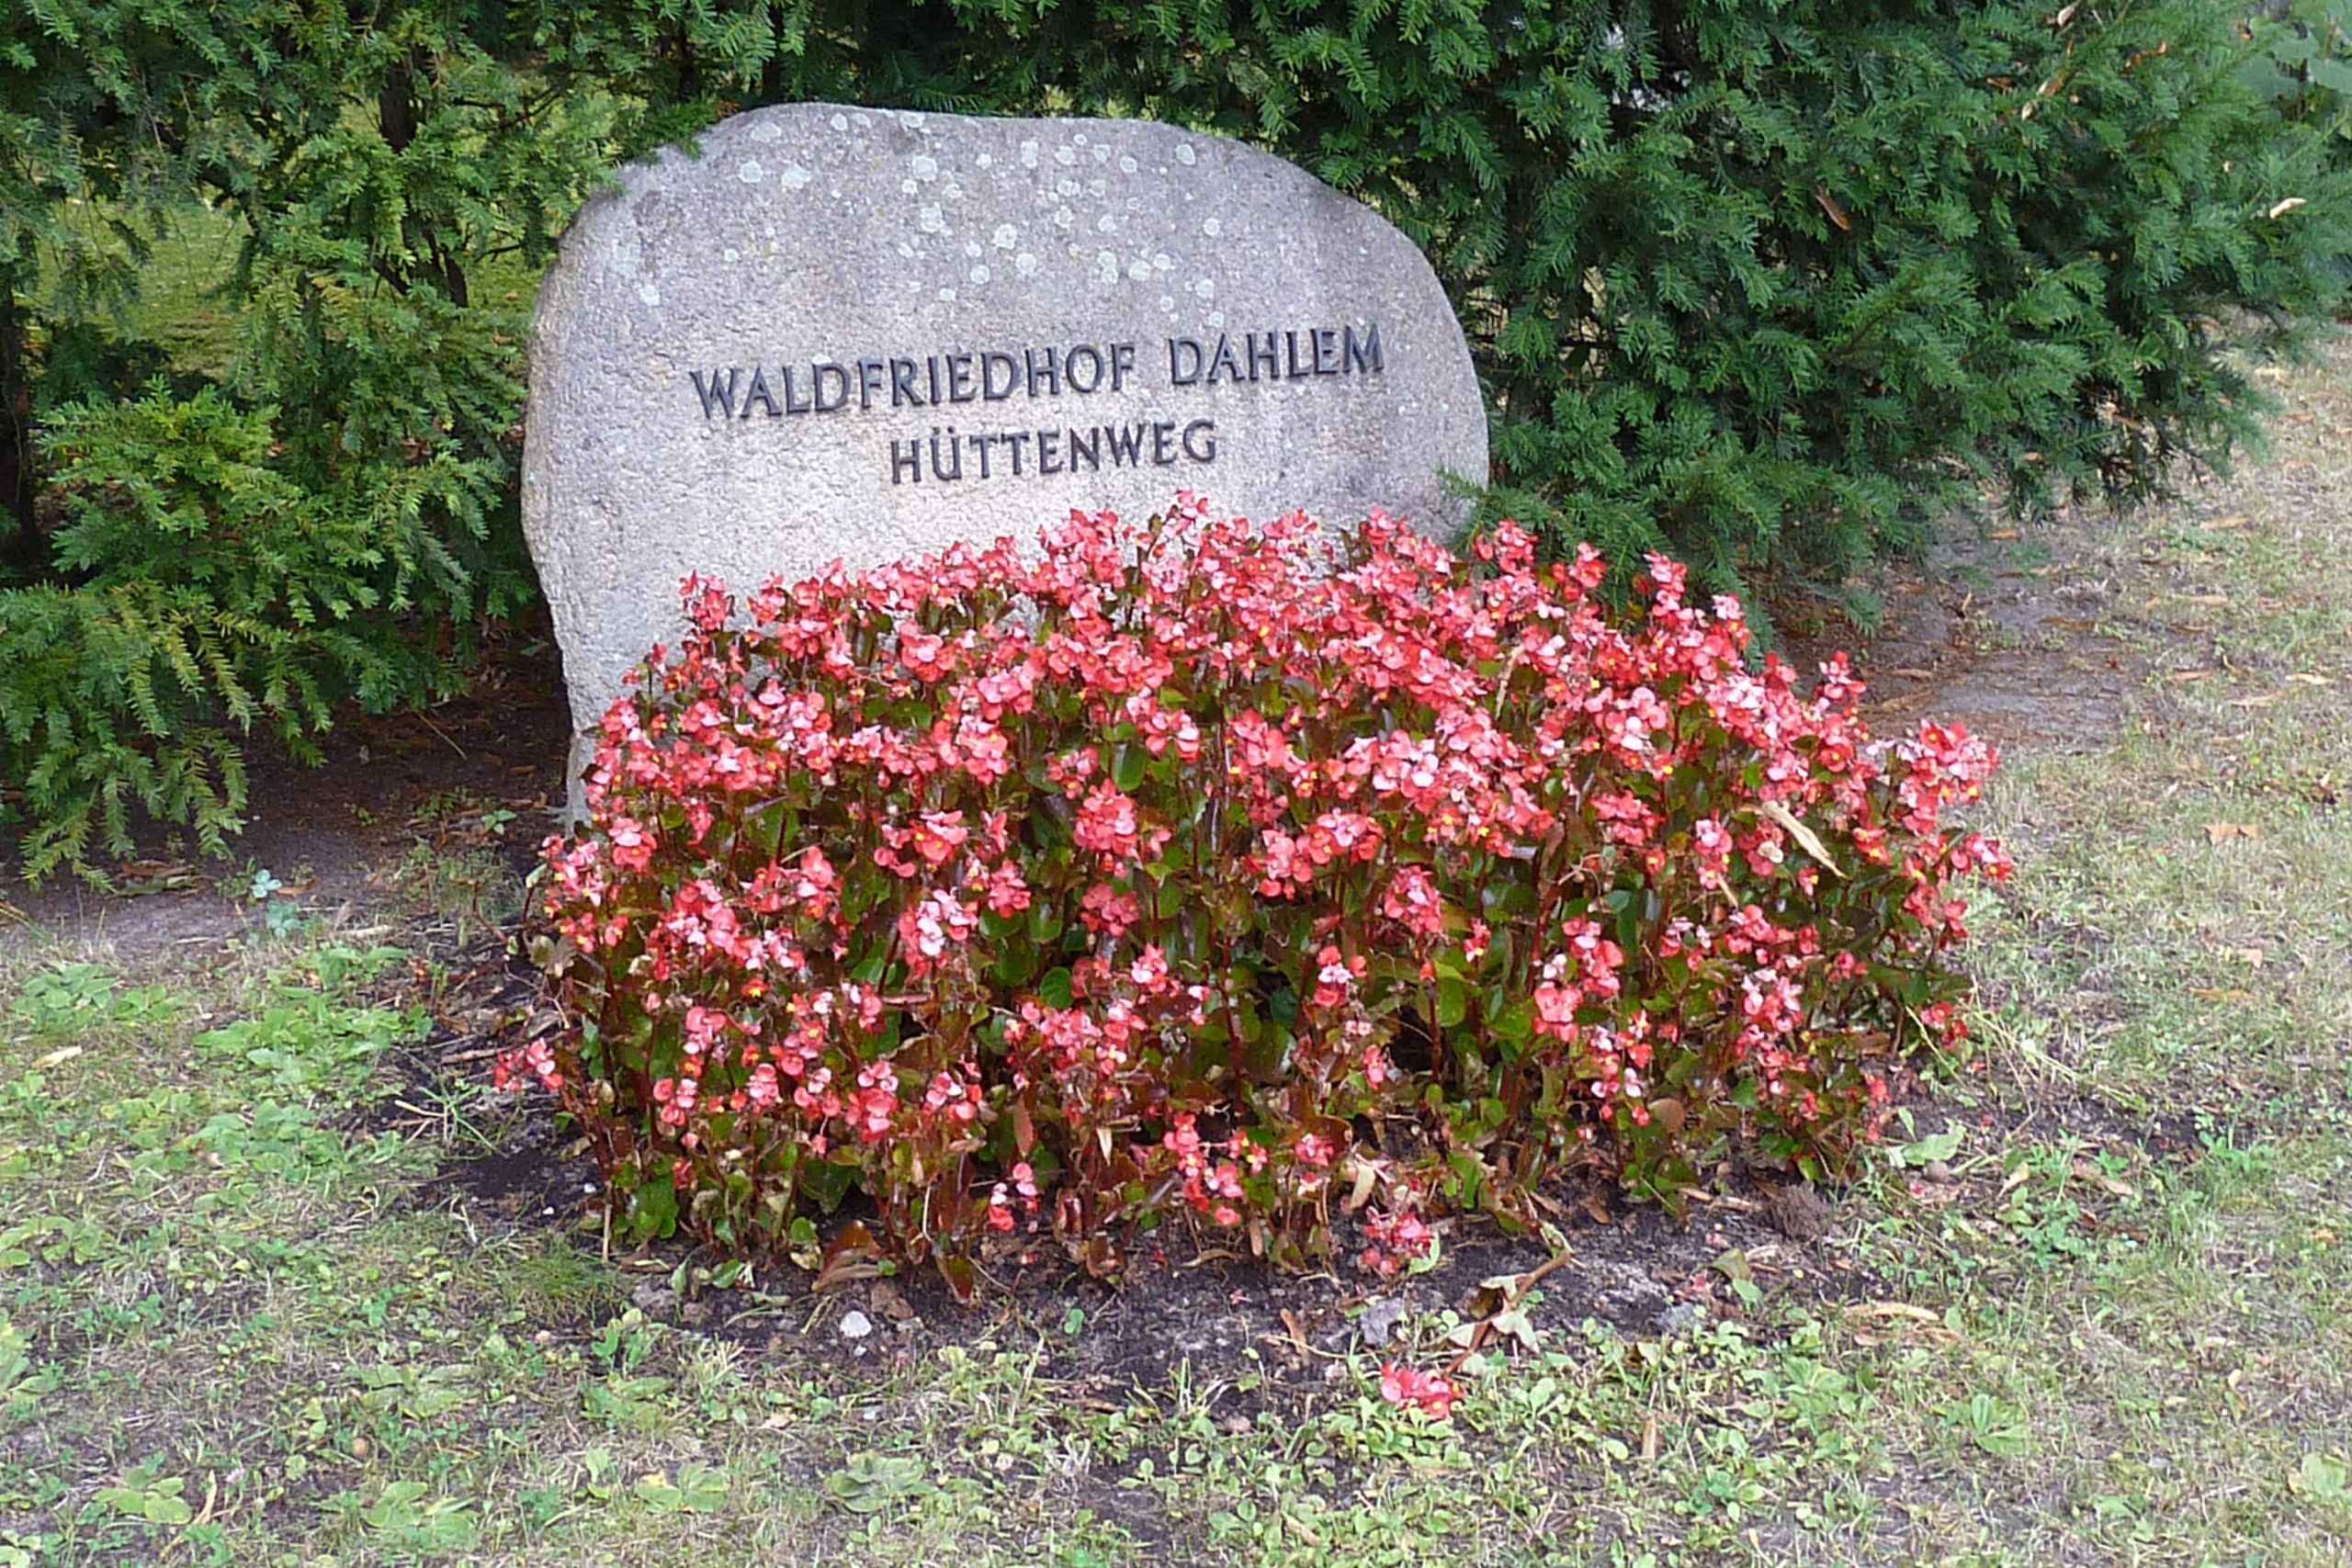 Waldfriedhof Dahlem Eingang